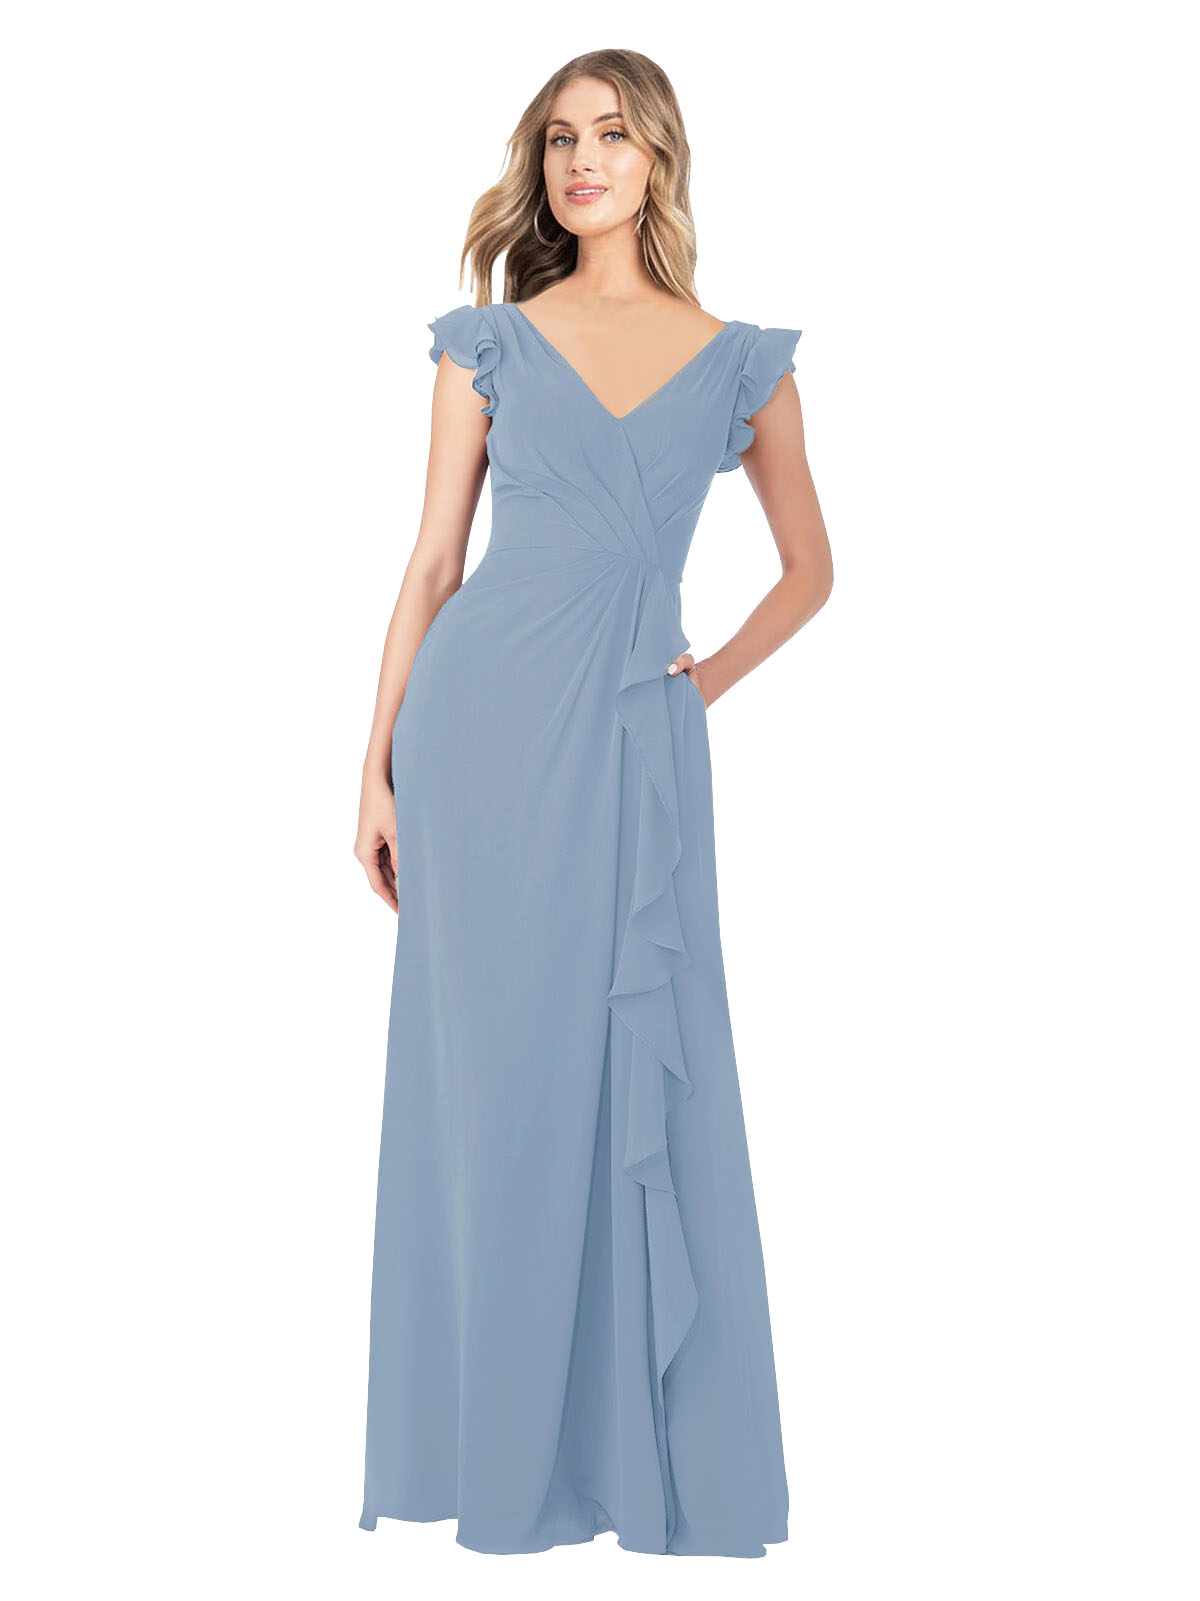 Dusty Blue A-Line V-Neck Cap Sleeves Long Bridesmaid Dress Taryn